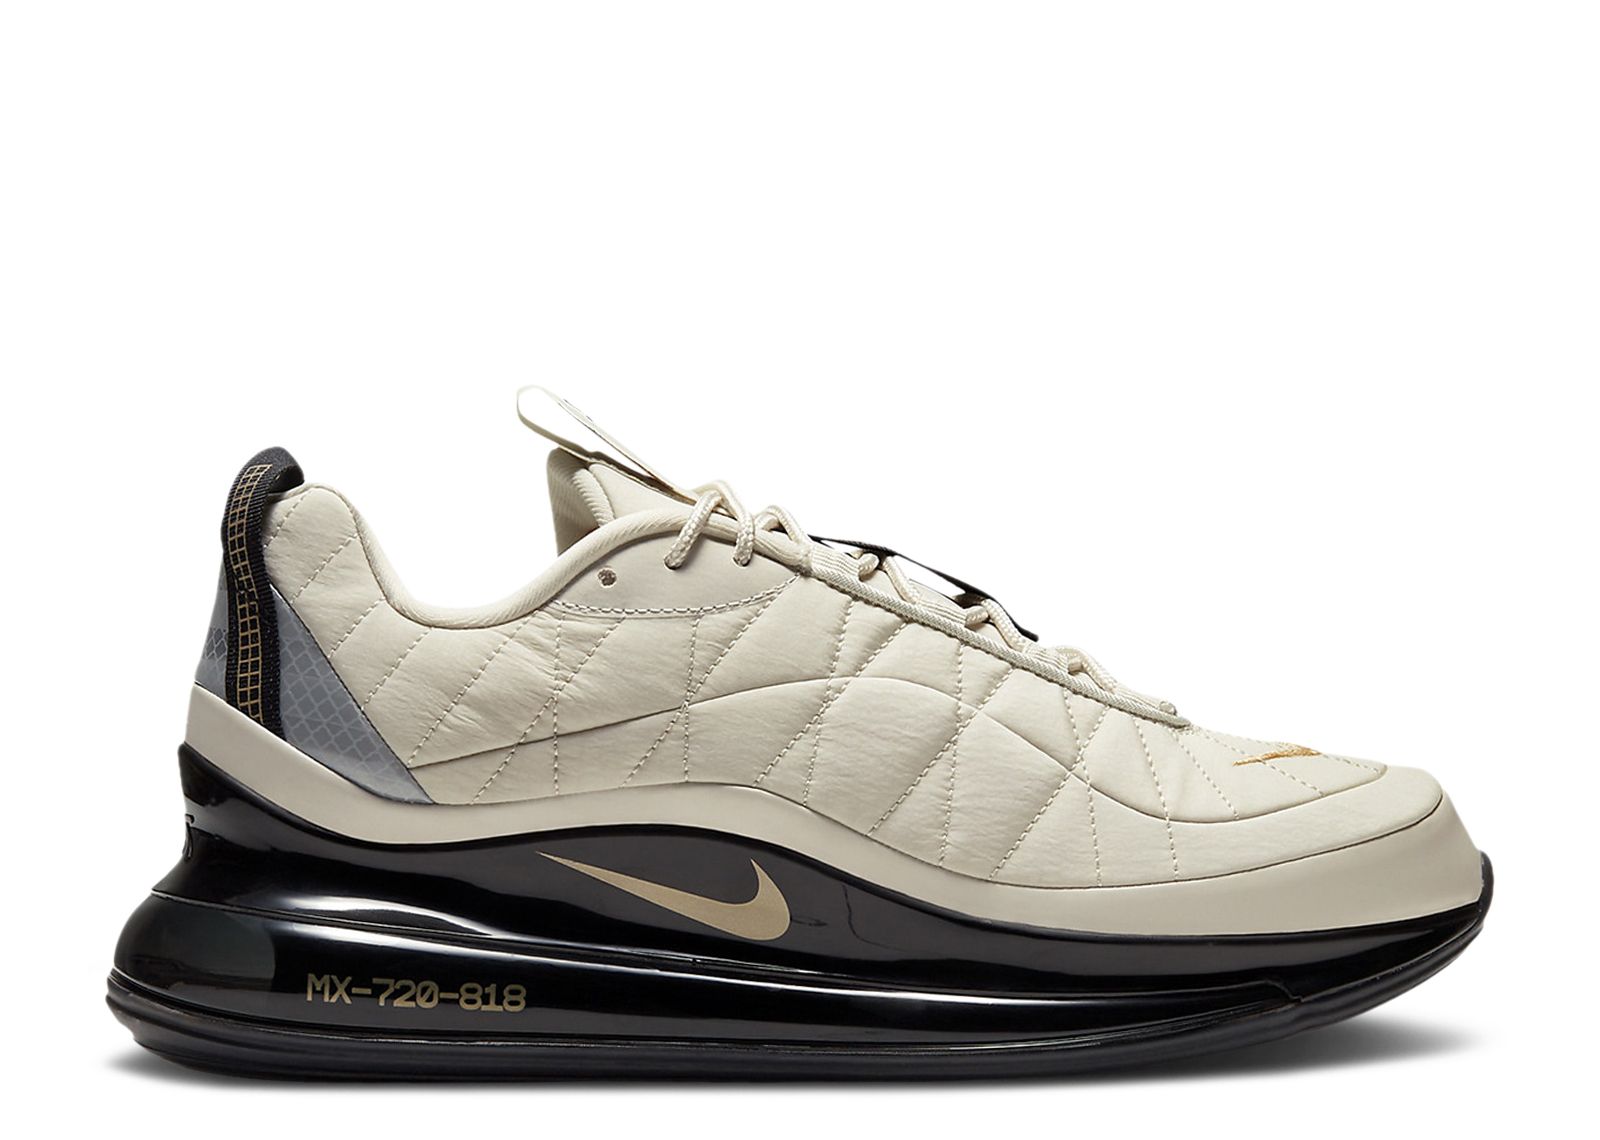 Nike MX-720-818 Sneaker - White